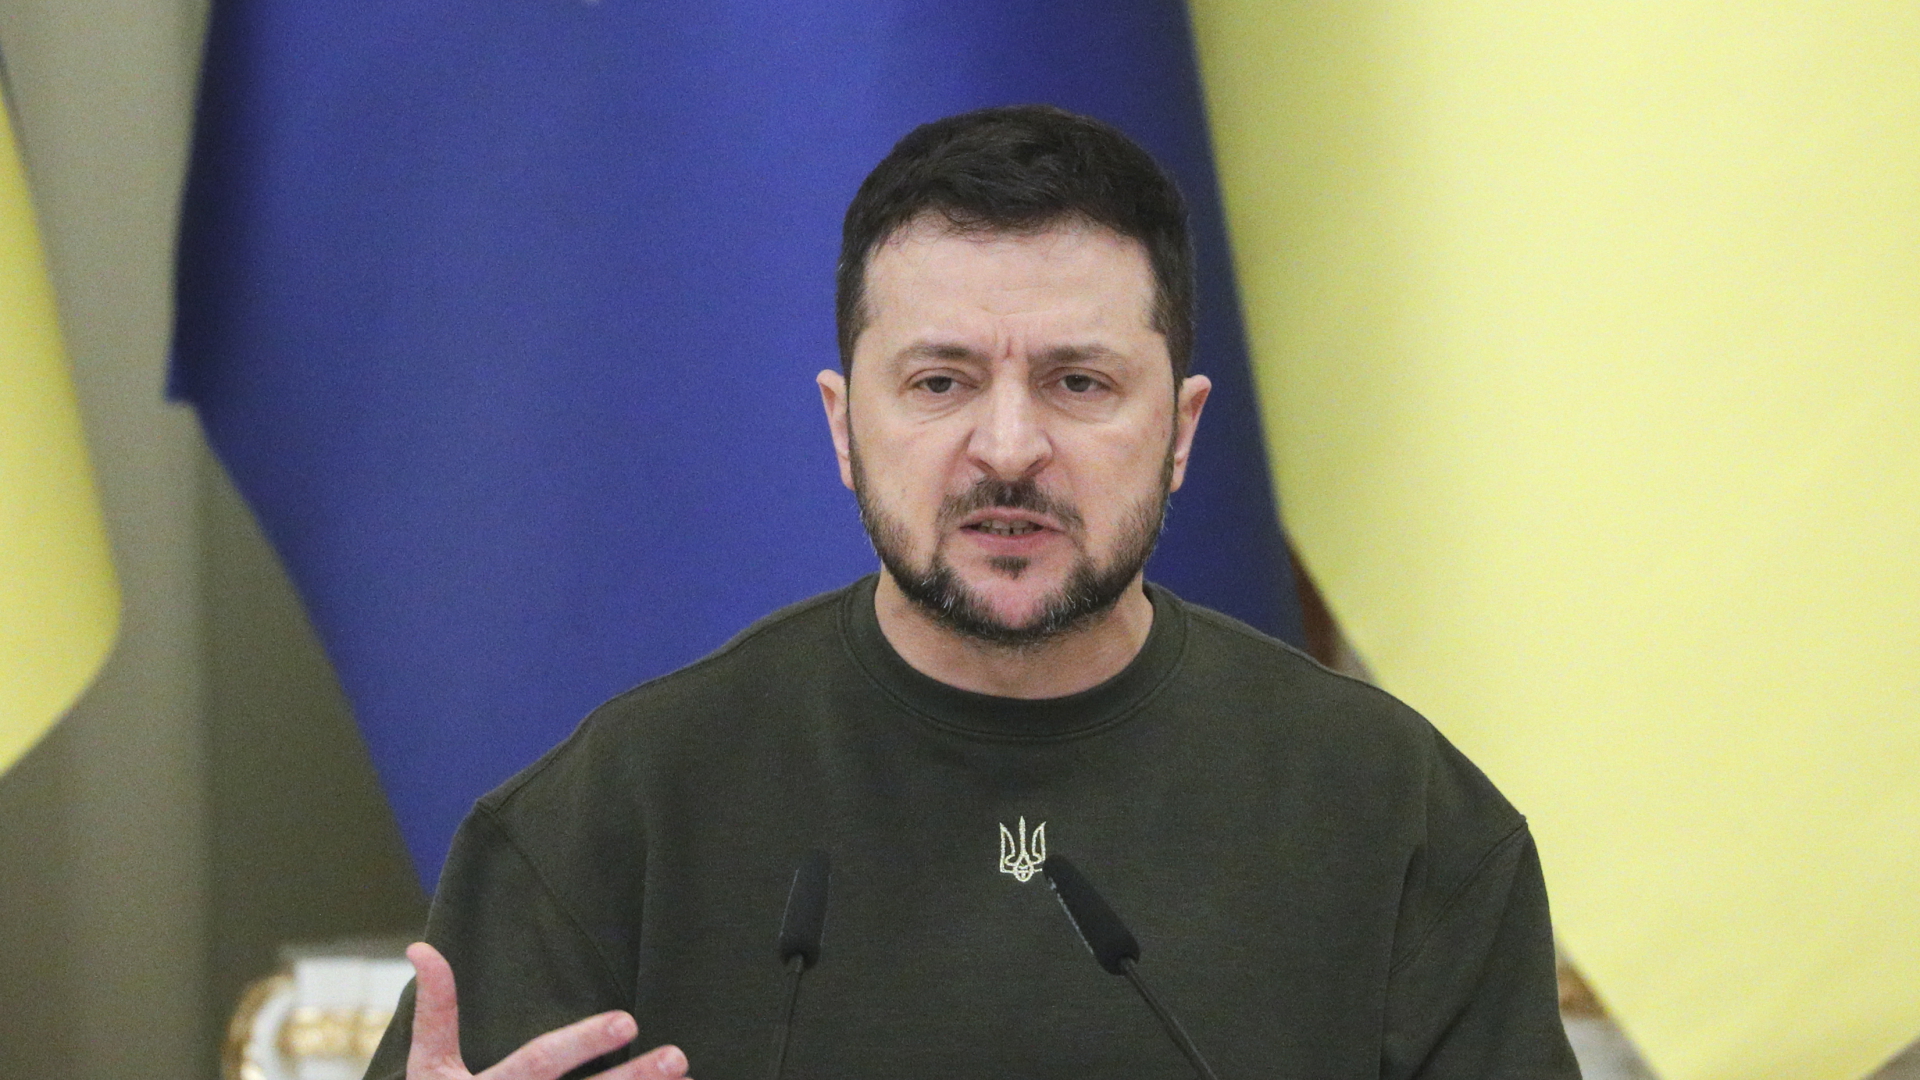 The war in Ukraine: Zelensky demands an acceleration of arms shipments